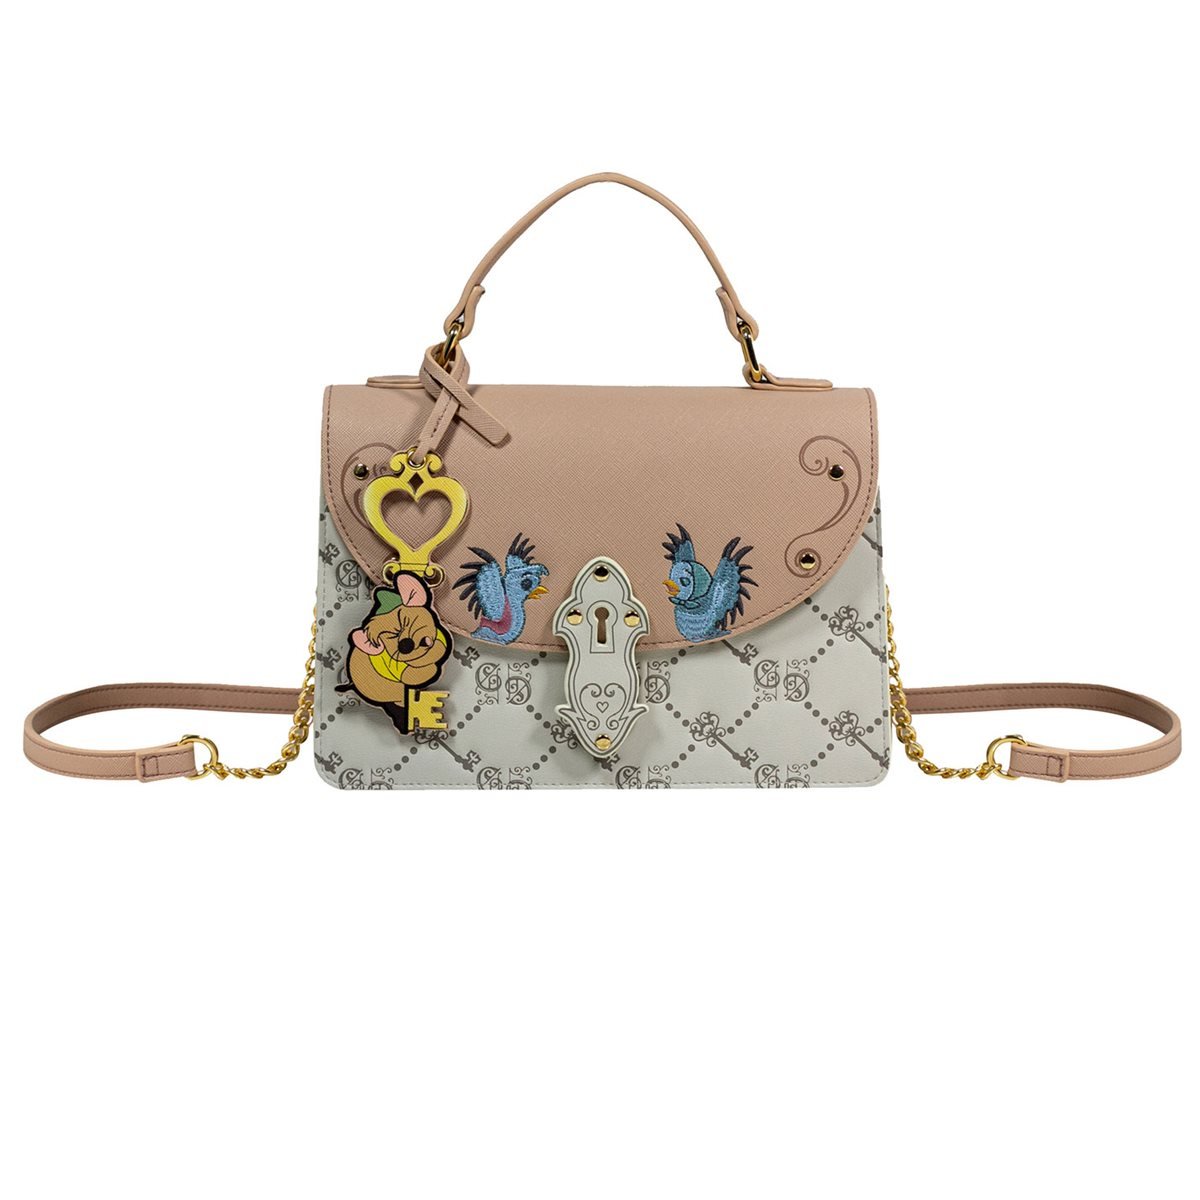 Handbag Brand Offers Cinderella Chic